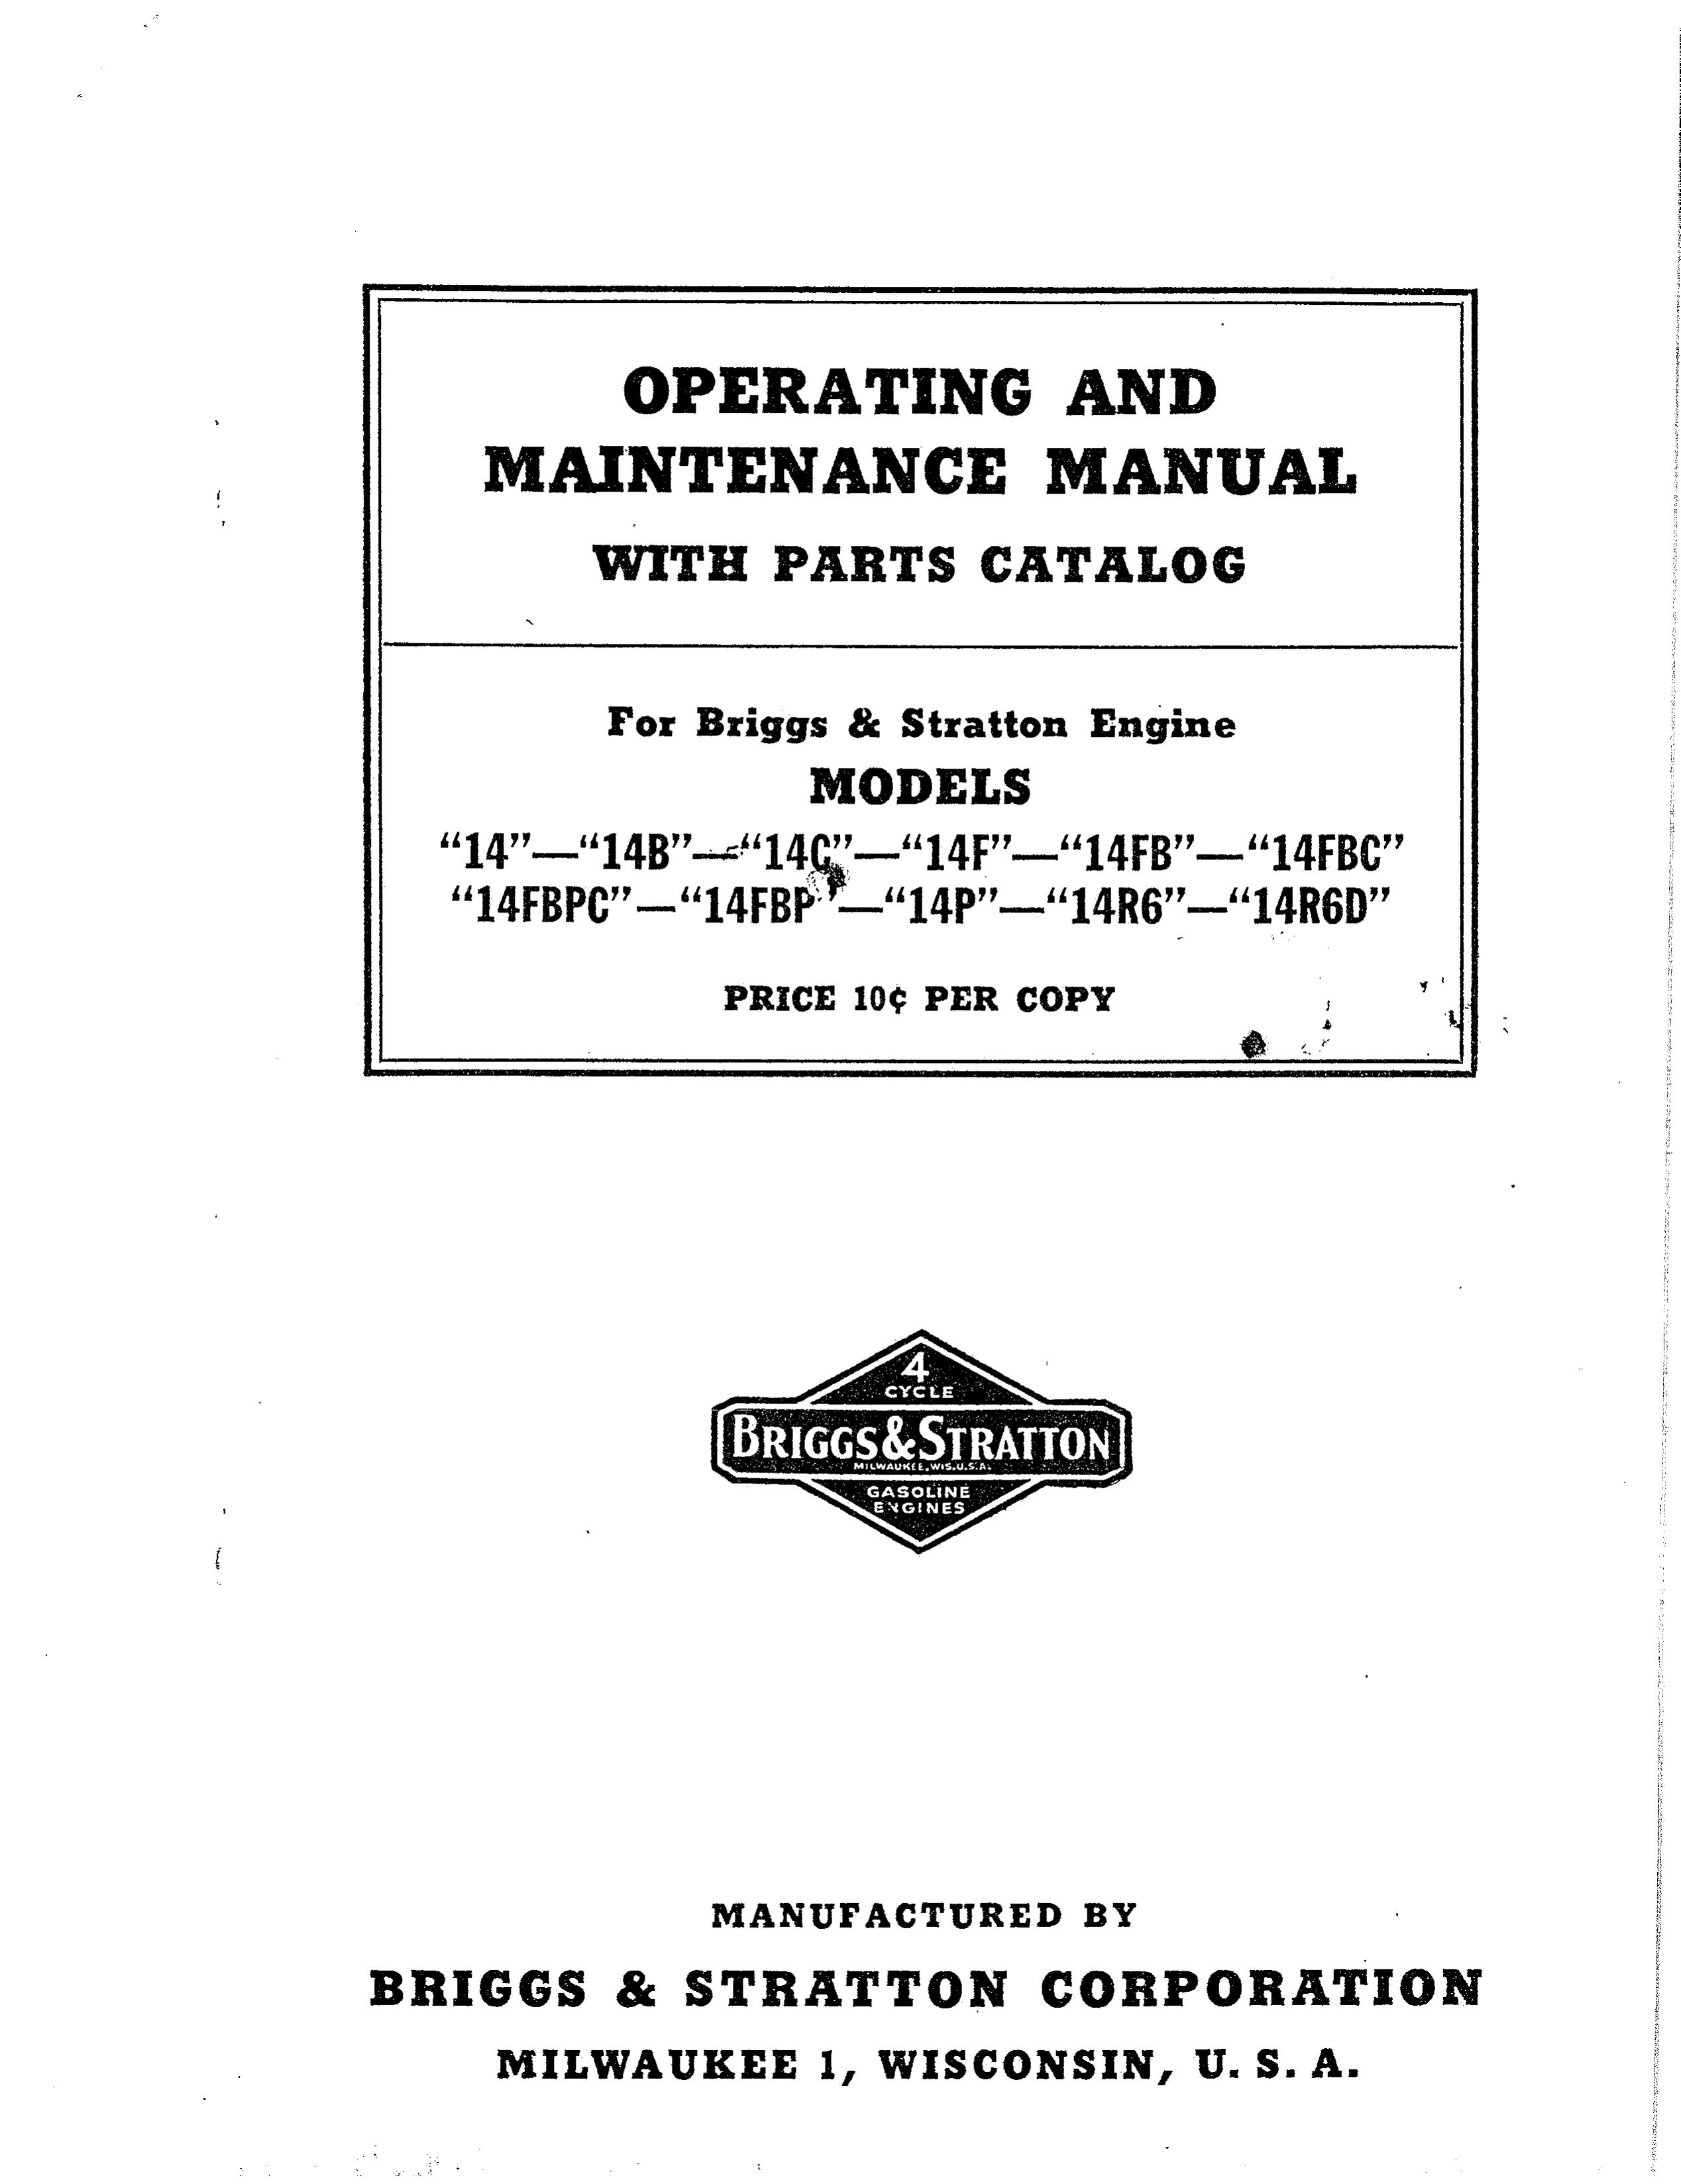 Briggs & Stratton 14RG Lawn Mower User Manual